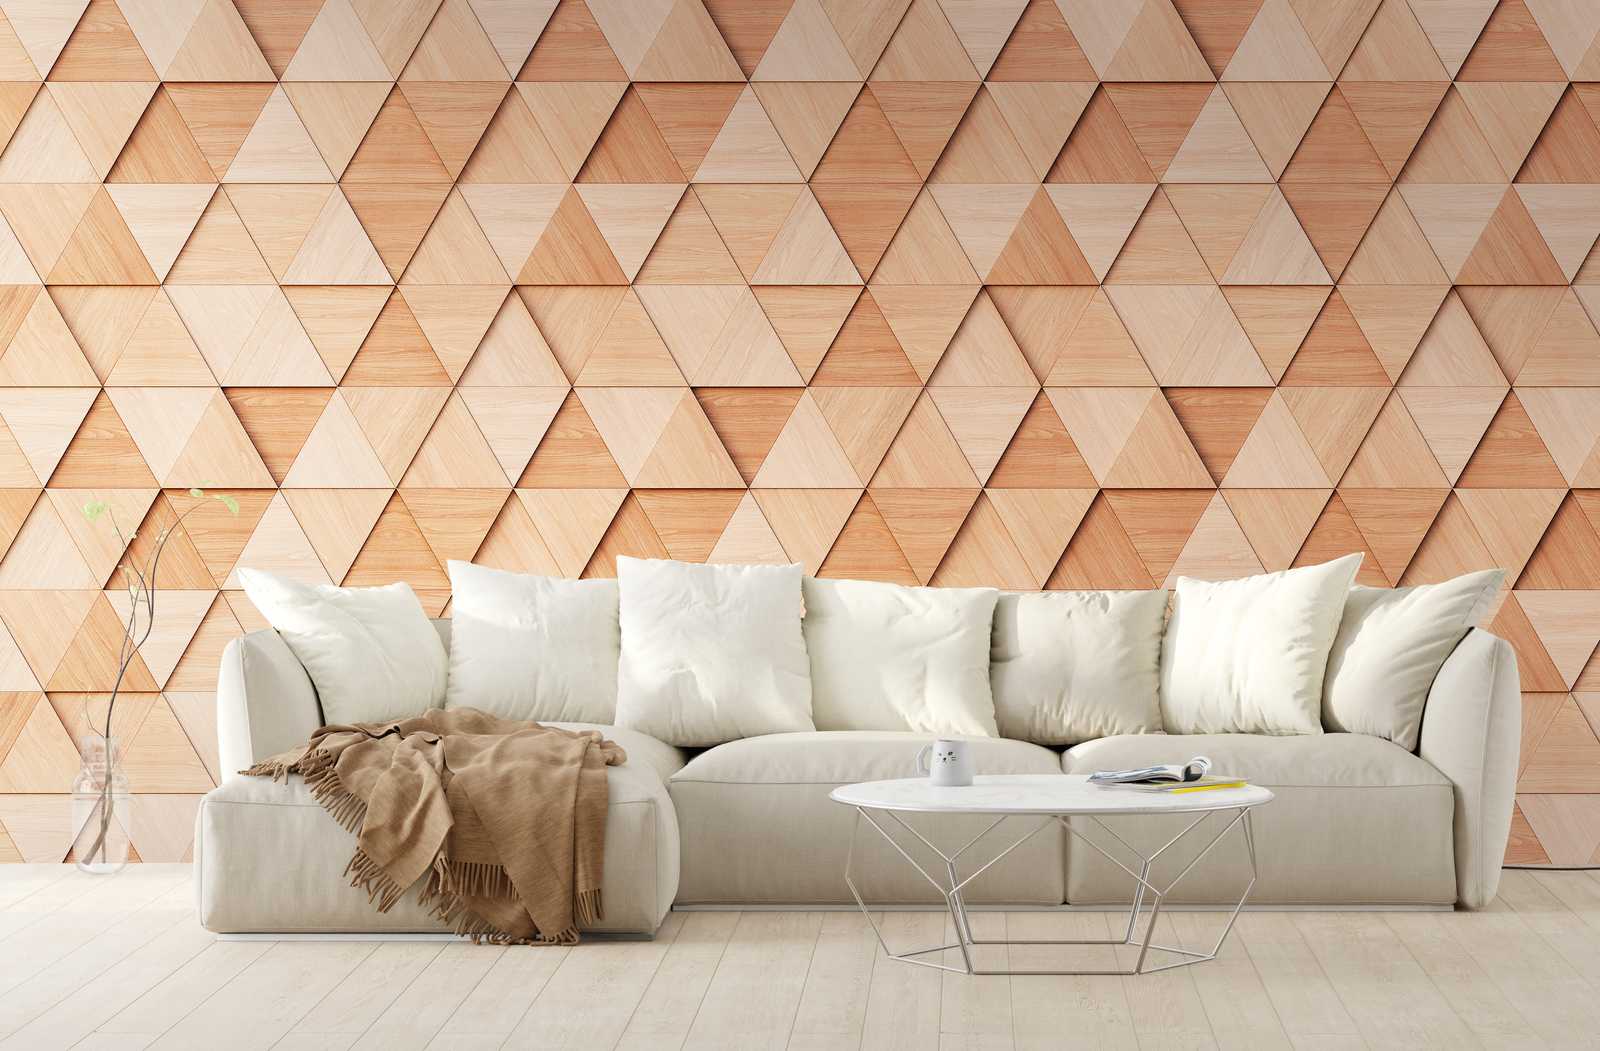             Behang nieuwigheid - motief behang hout-look design met 3D driehoek patroon
        